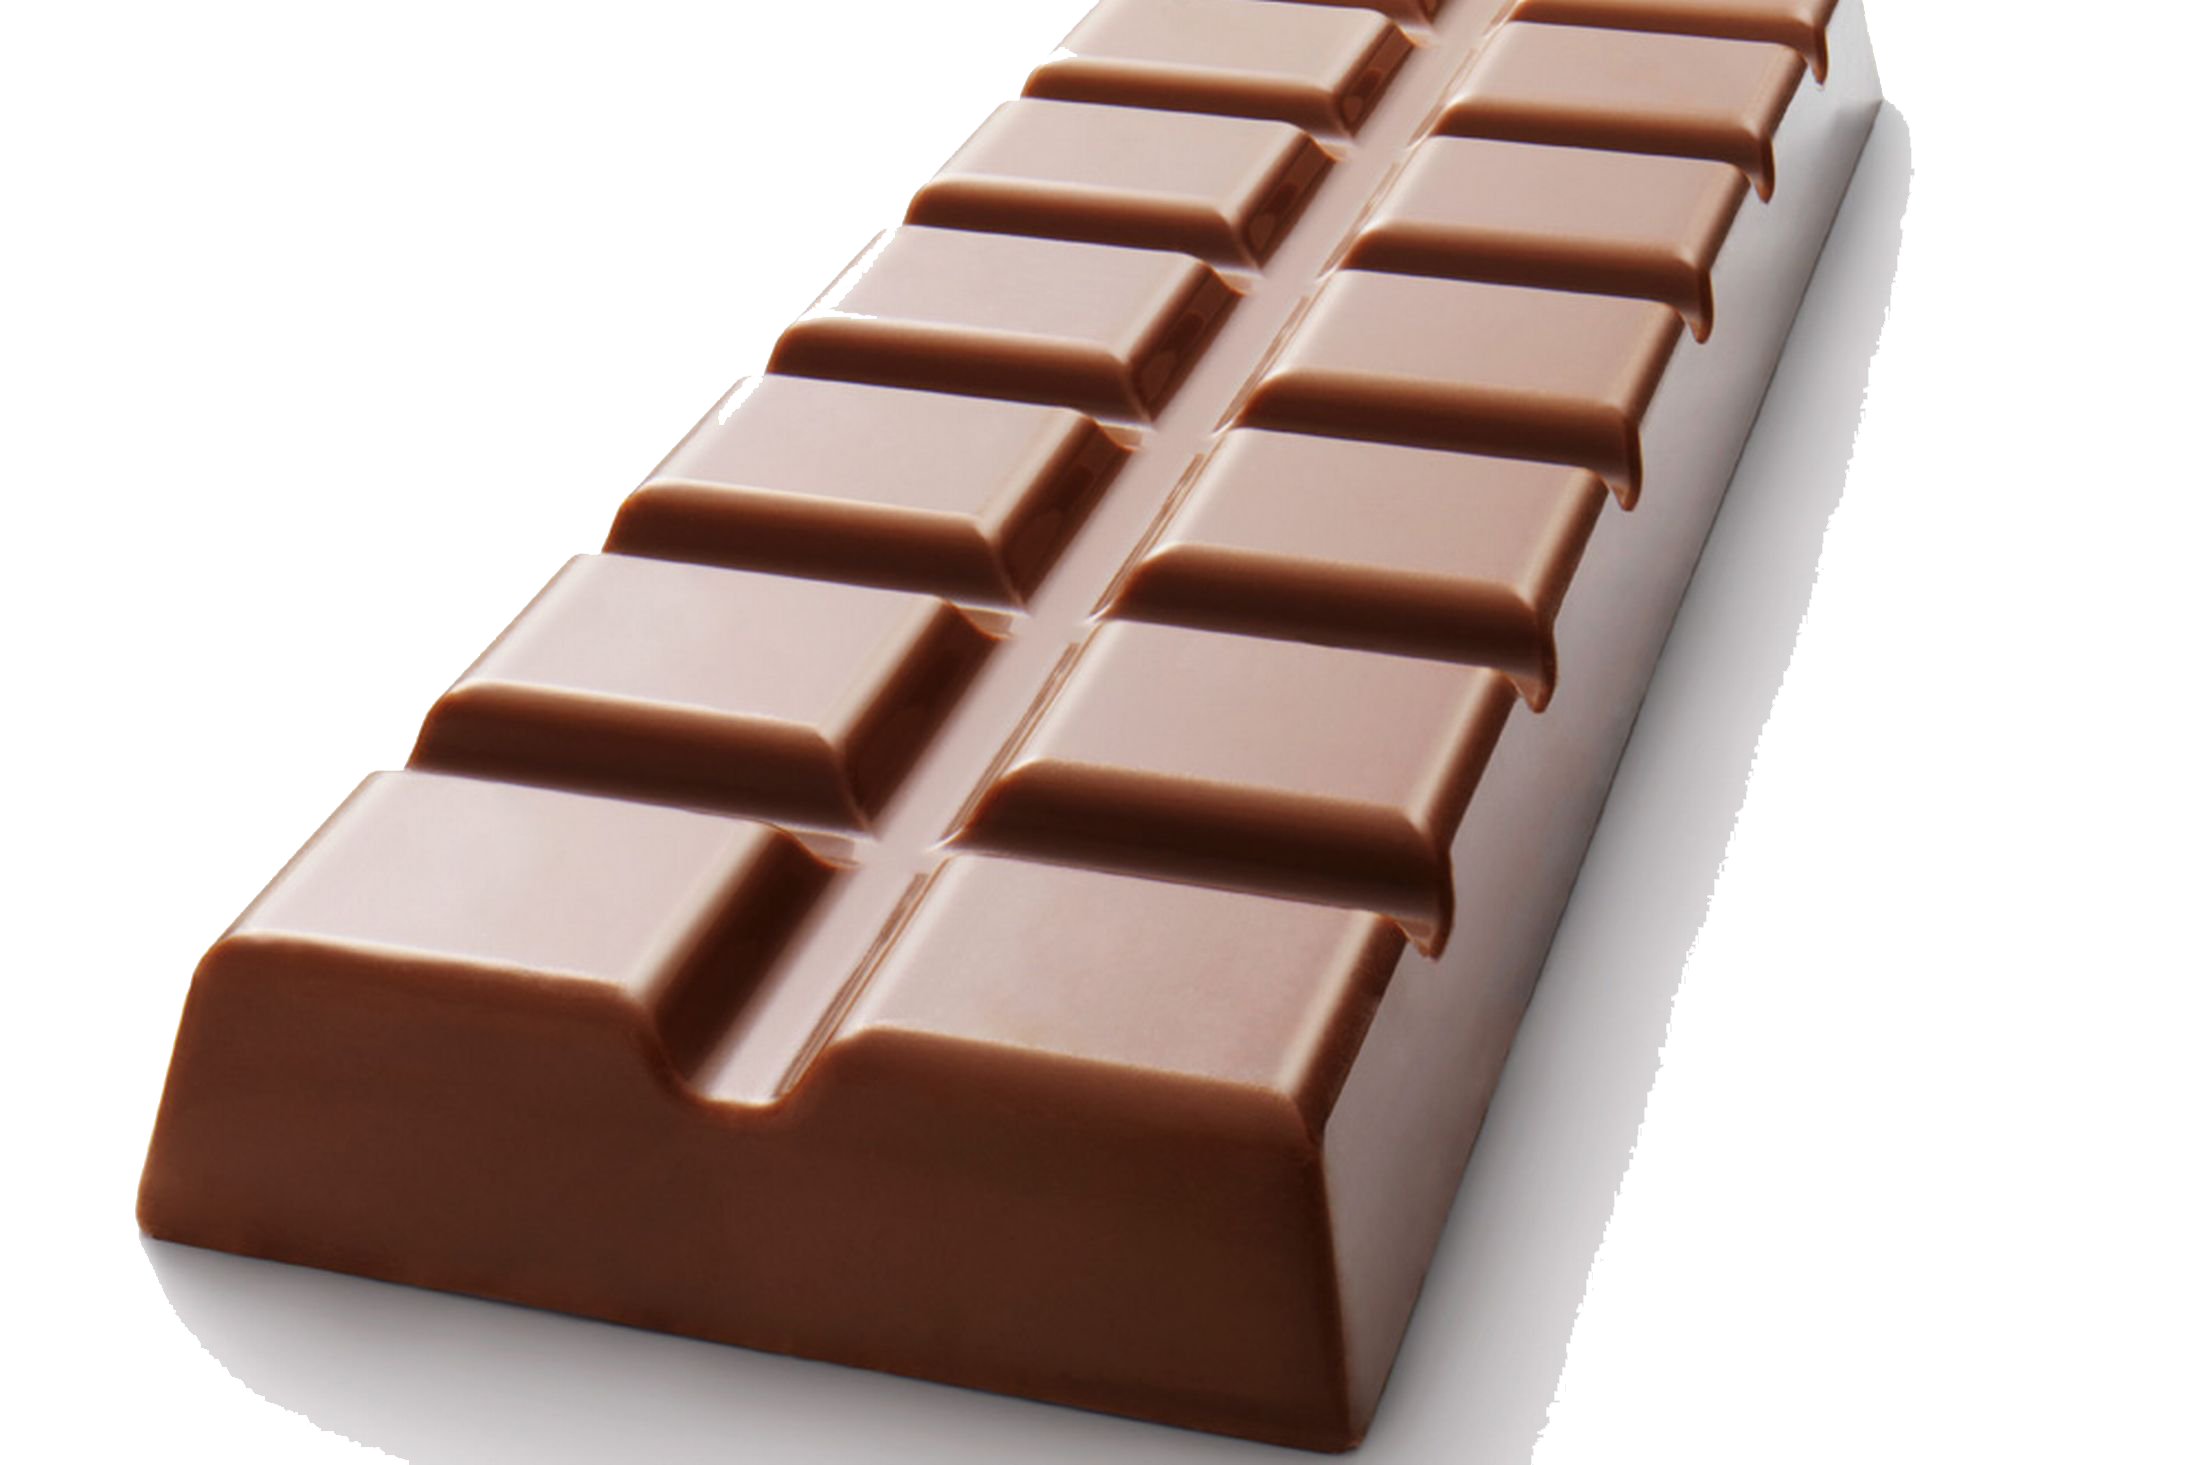 Chocolate Bar Image PNG Image